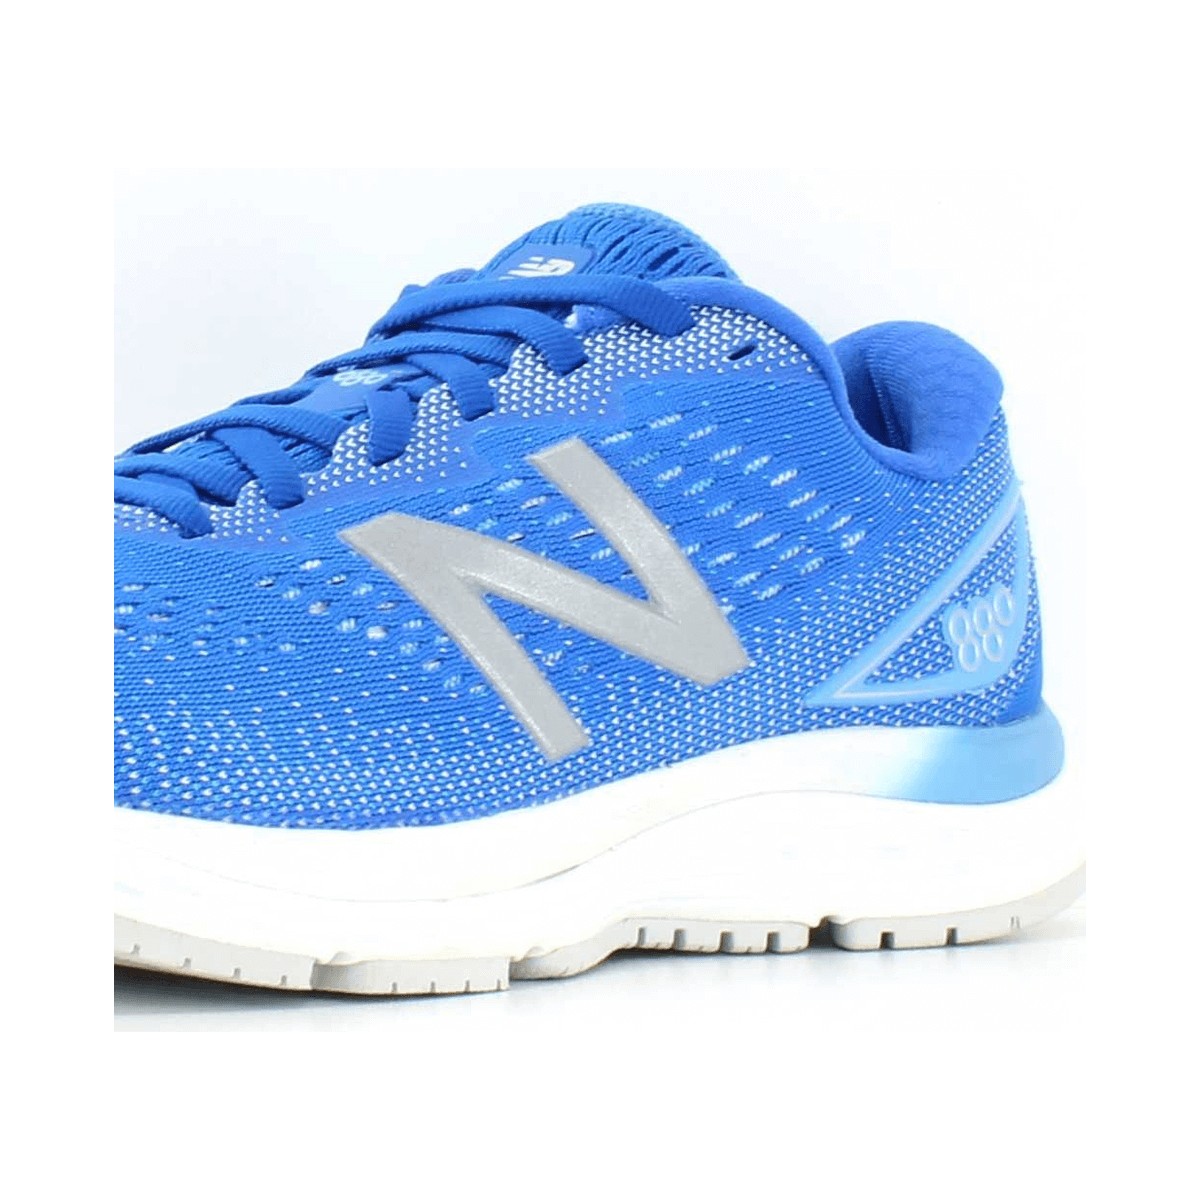 New Balance 880 v9 Women's Running Shoes Blue